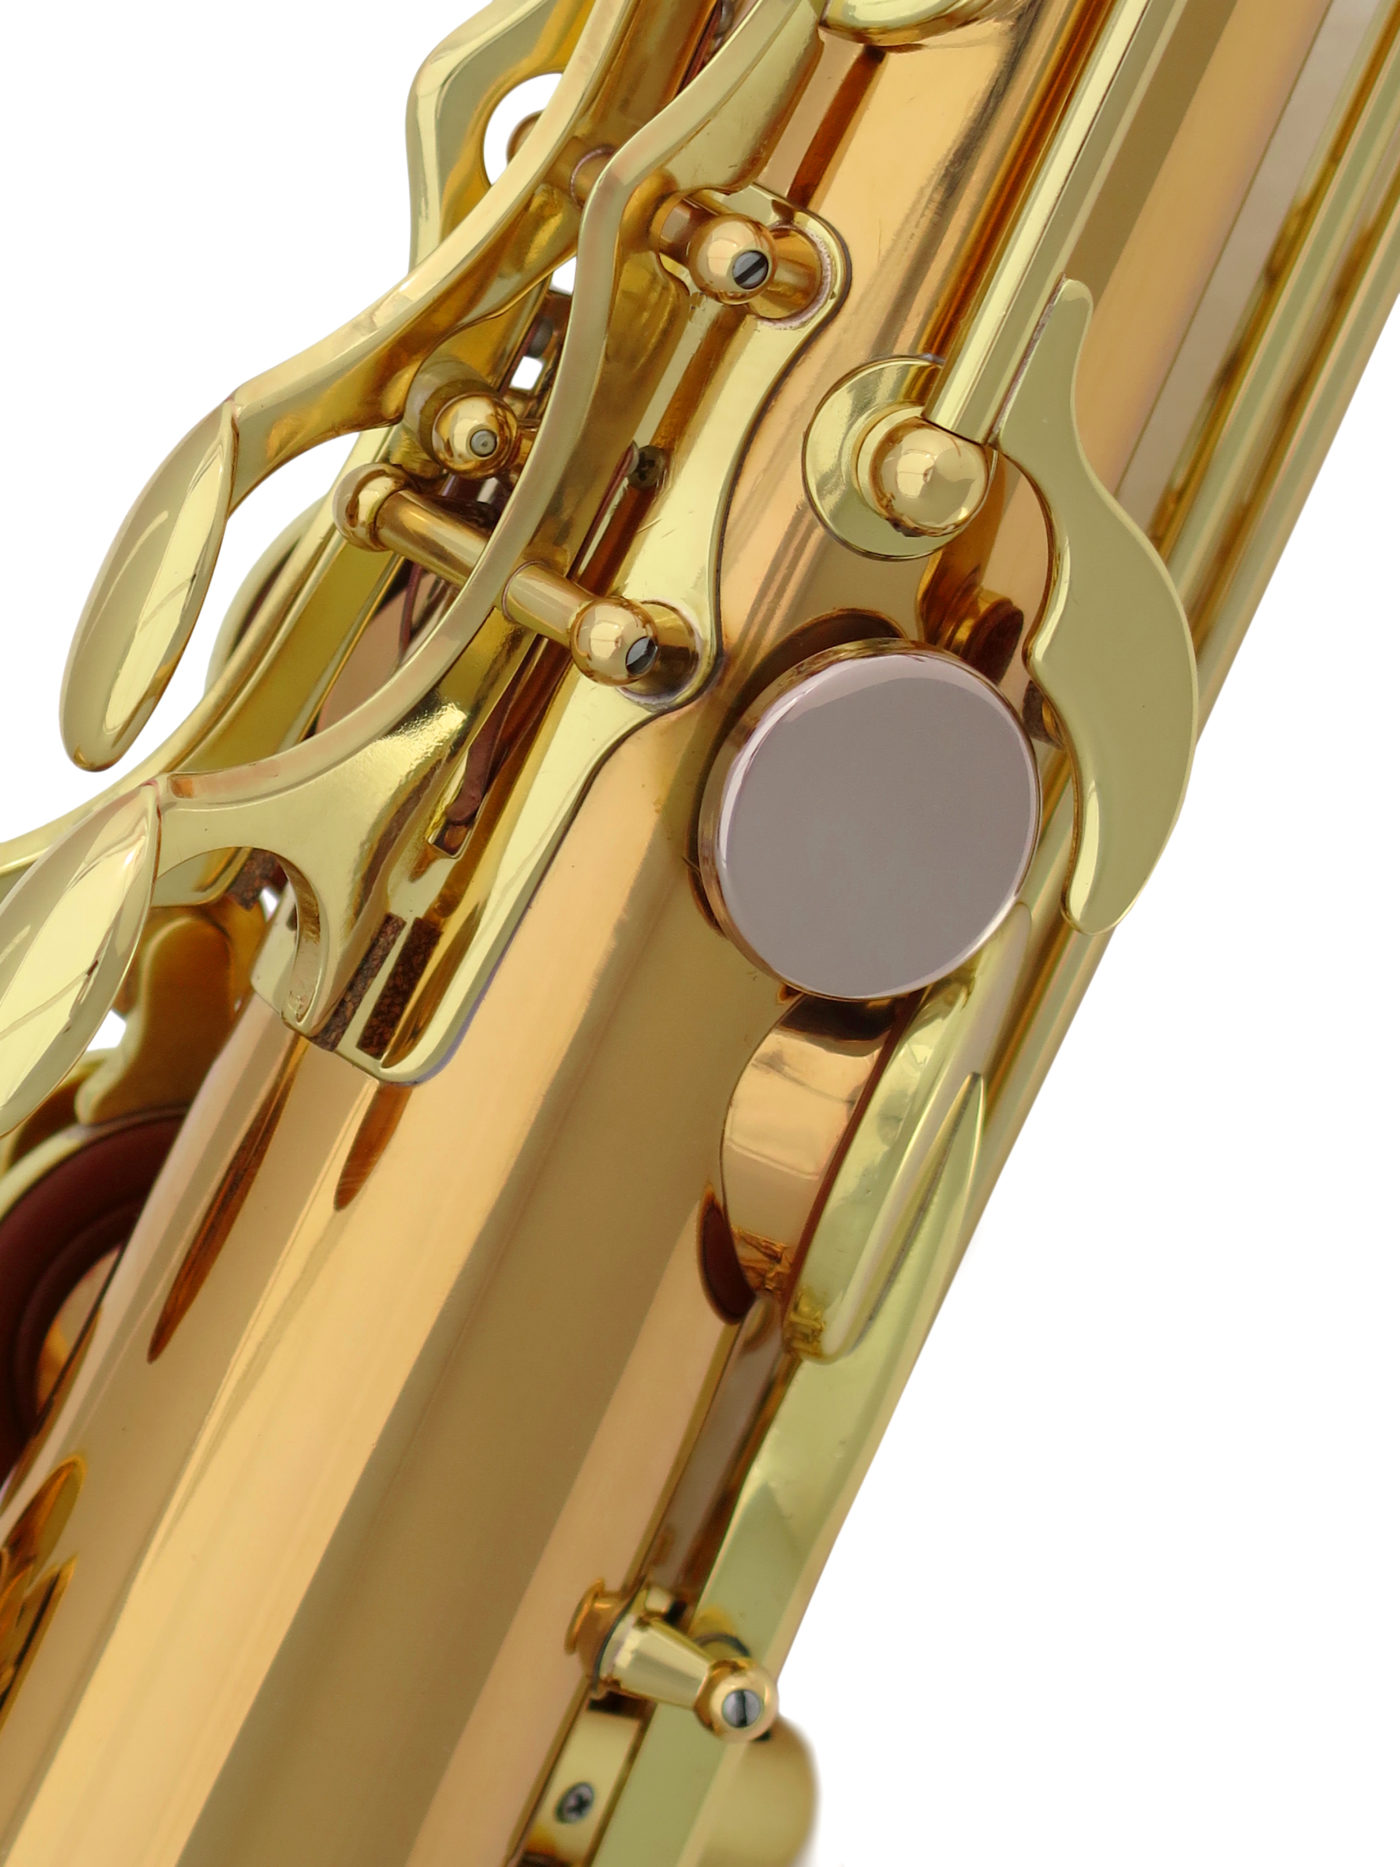 Saxophone Ténor Série RJ Brossé T800VB - Advences